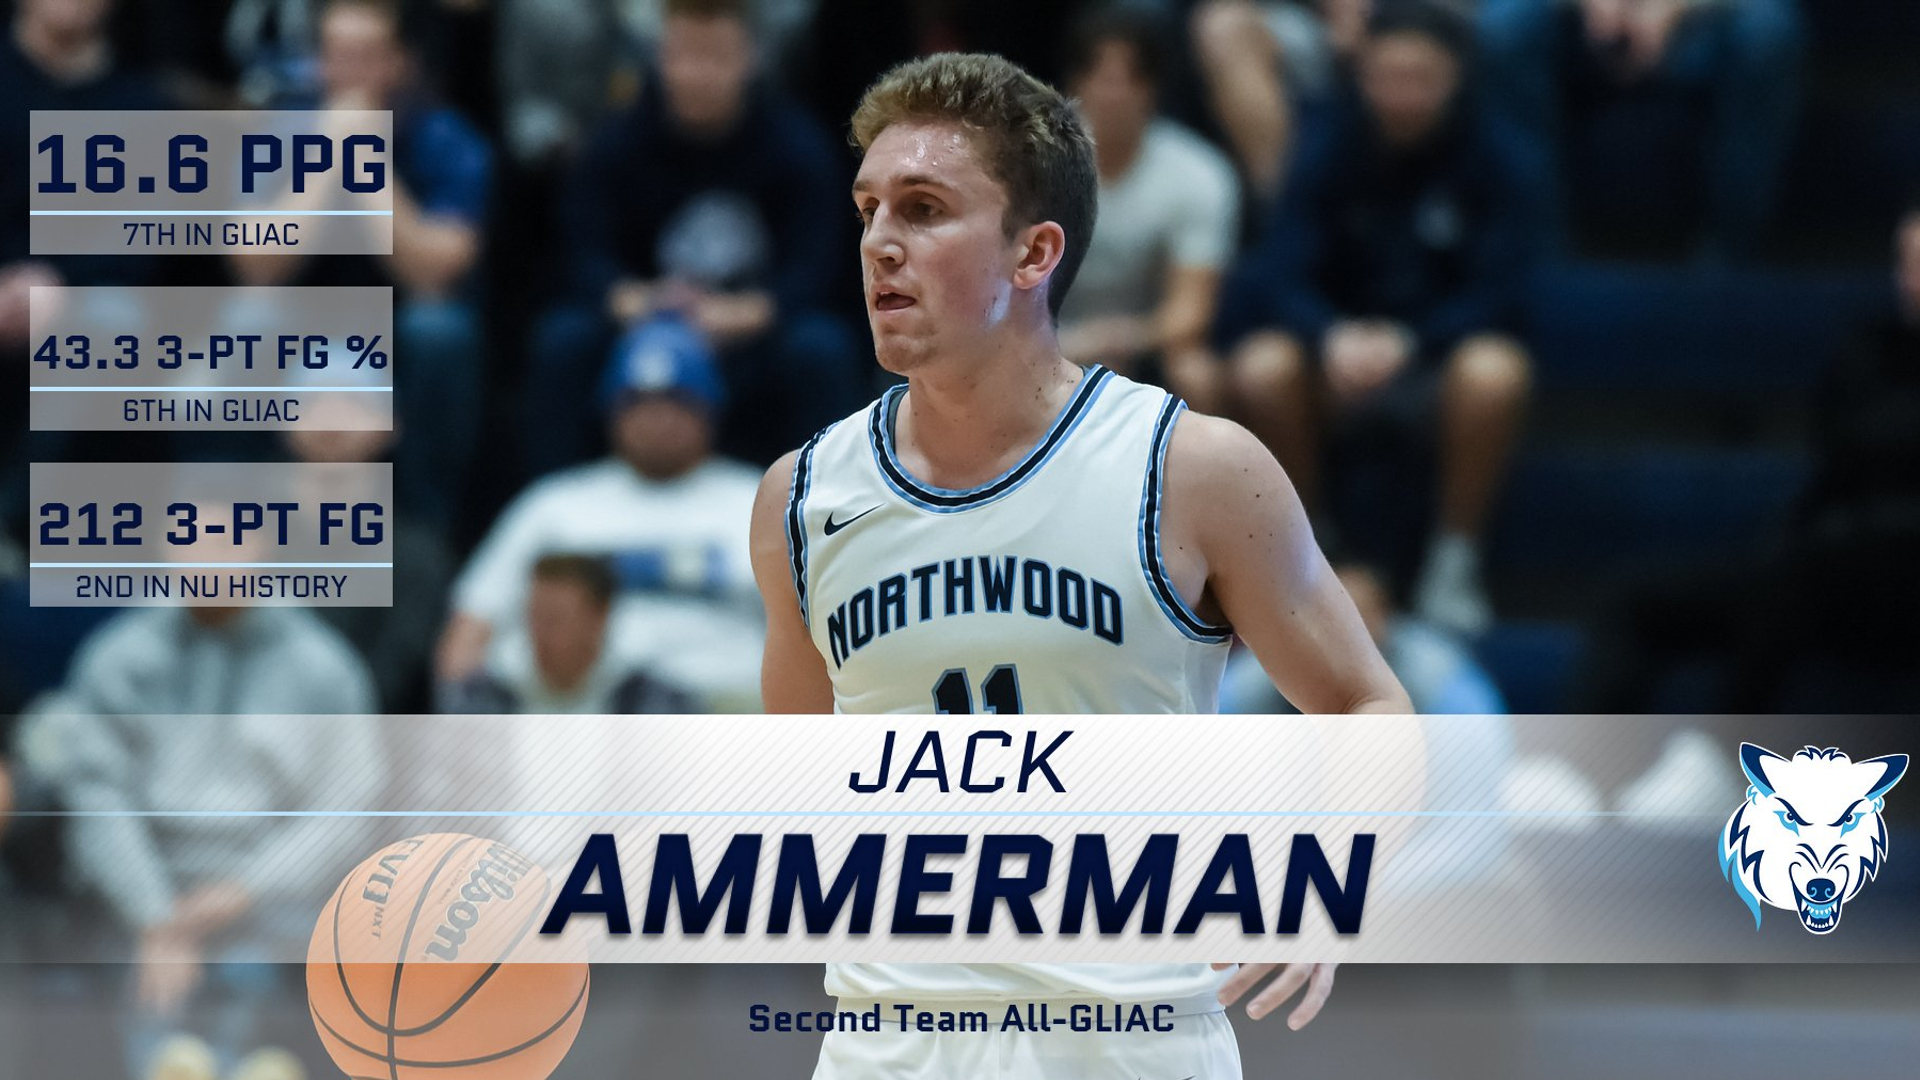 Jack Ammerman Named Second Team All-GLIAC